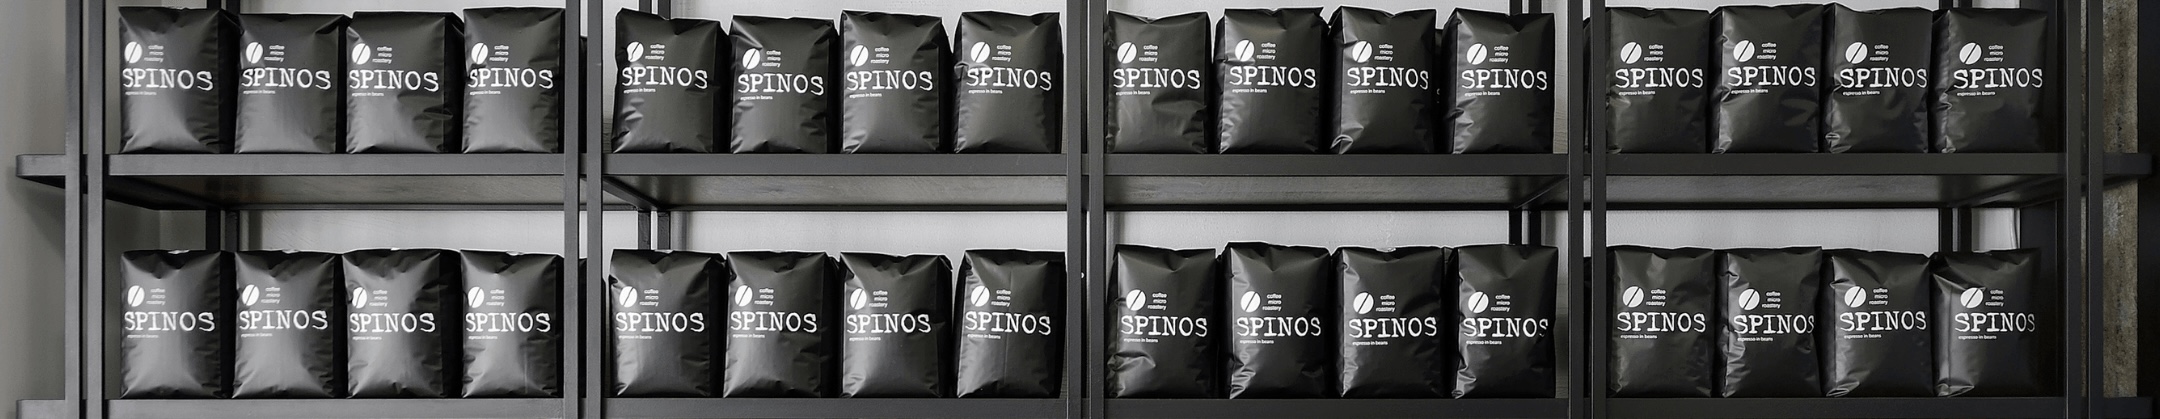 Spinos Coffee